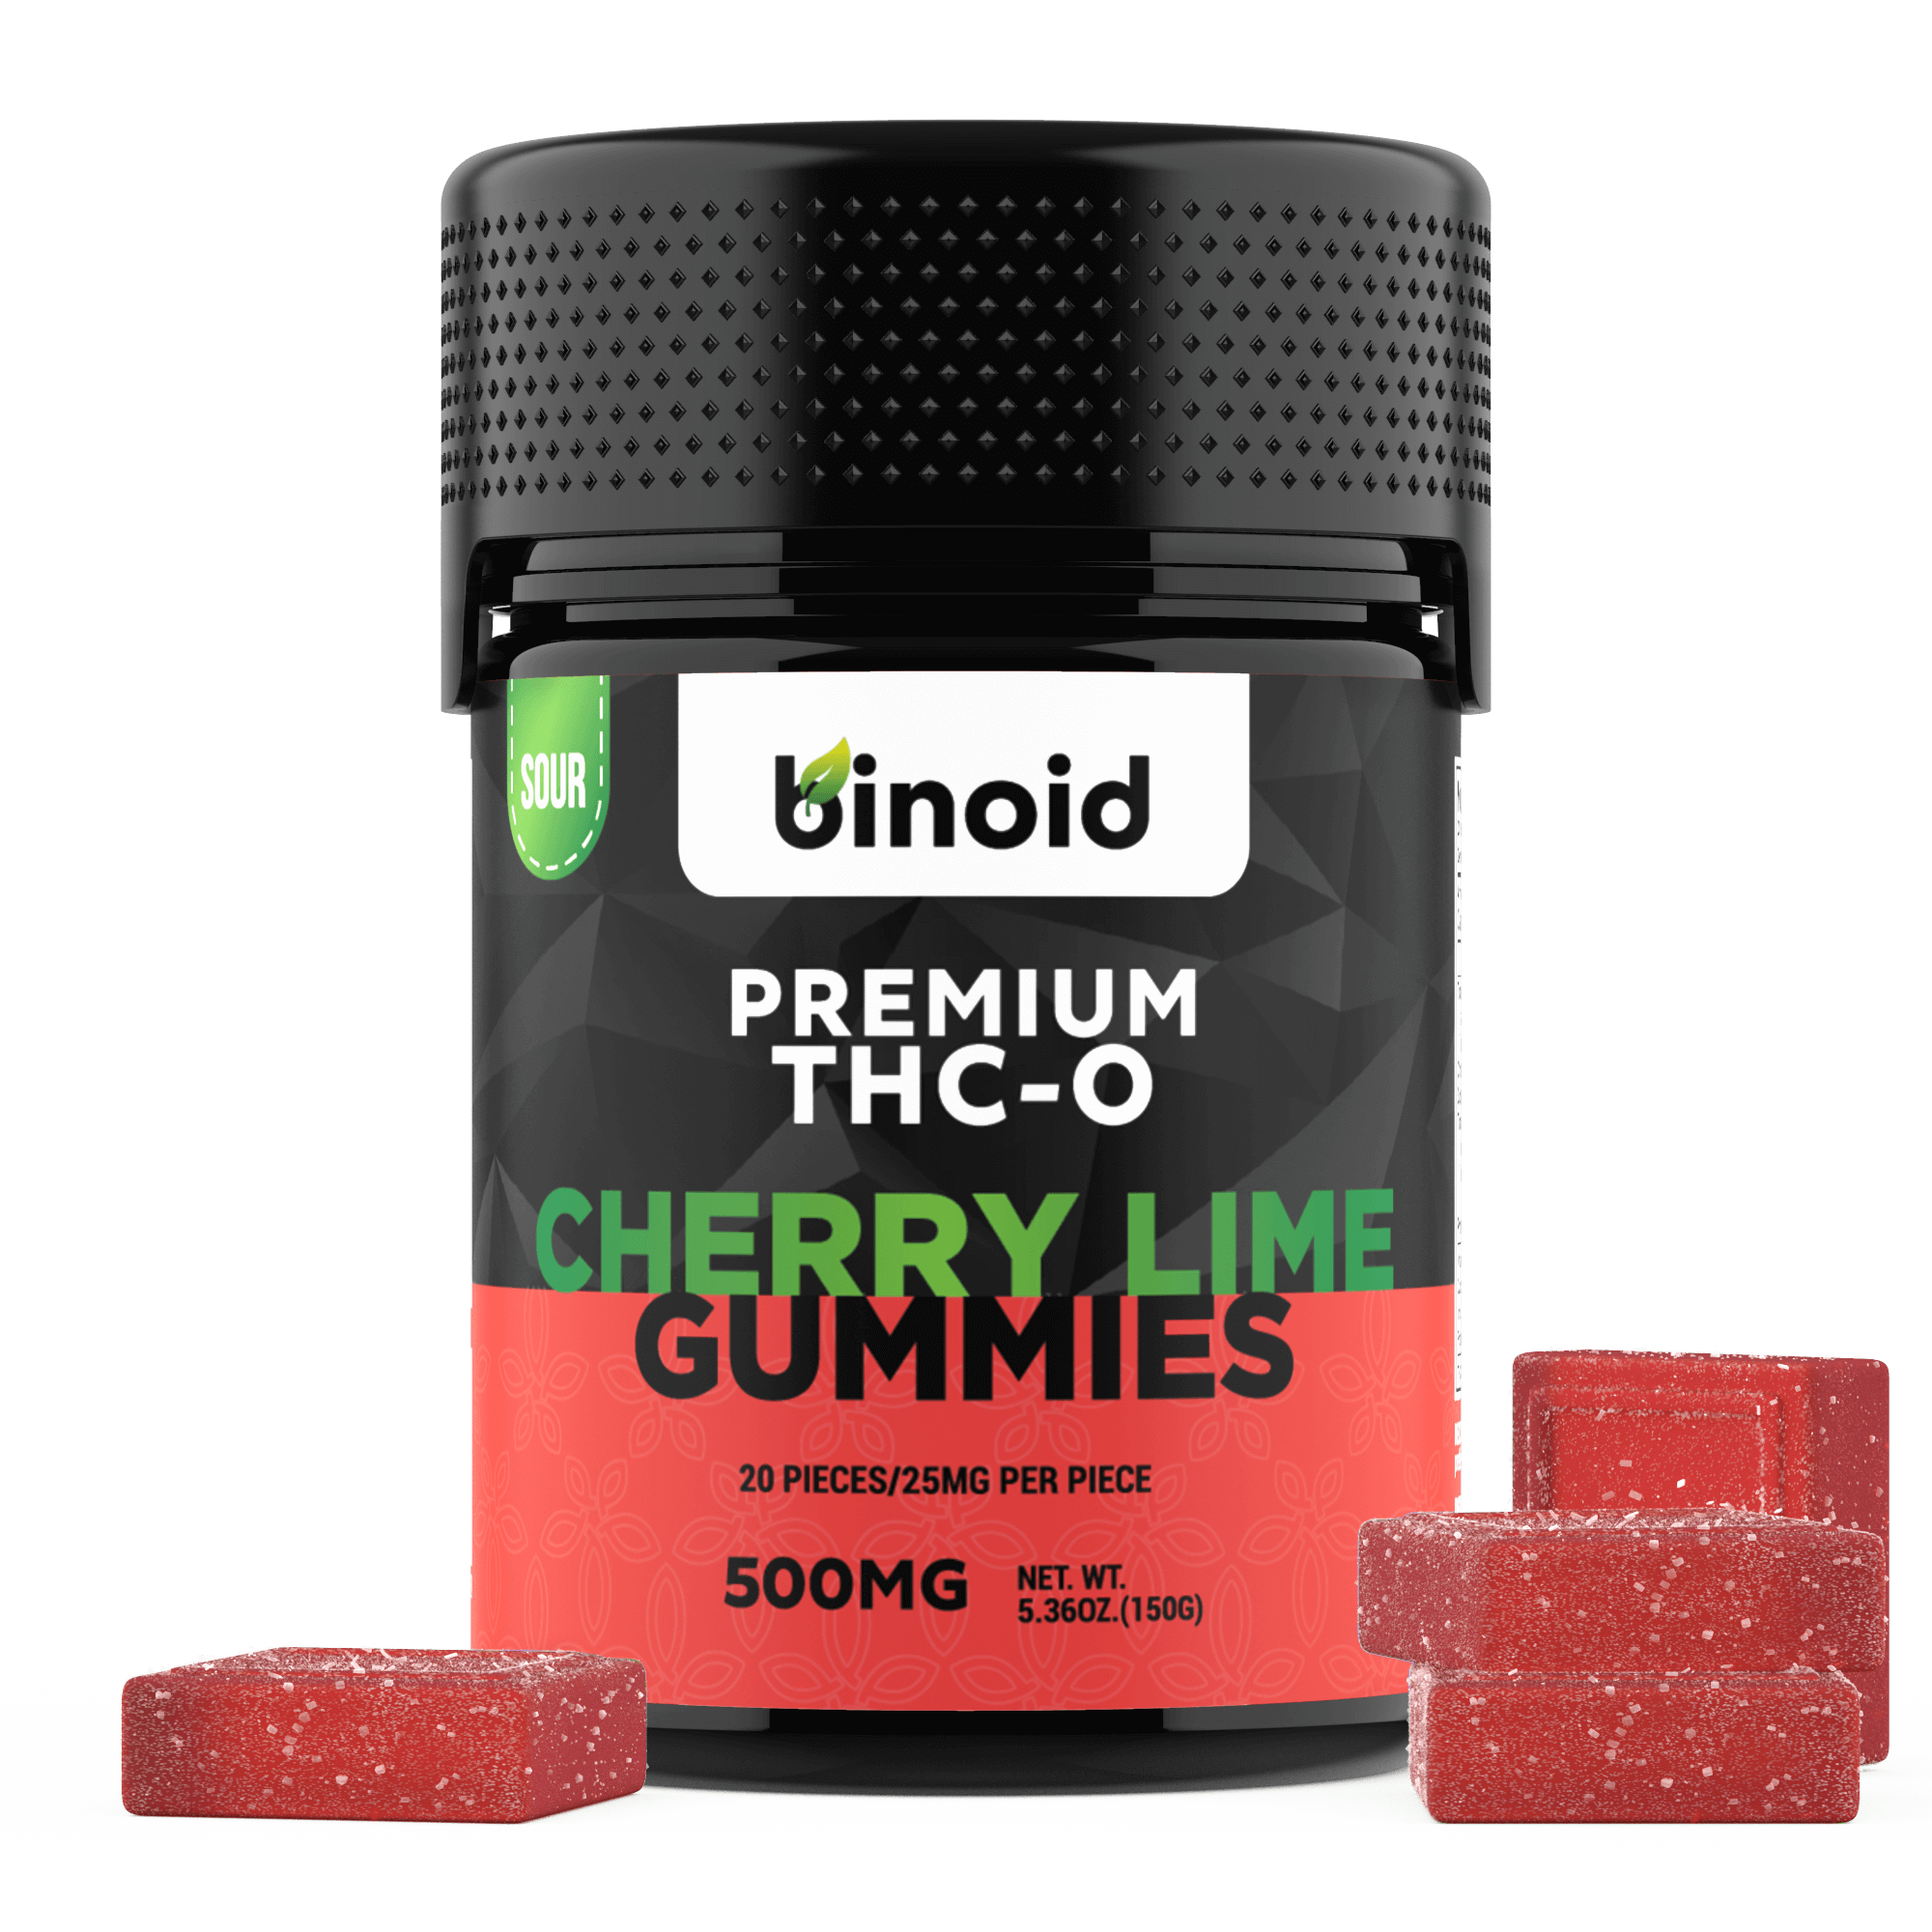 Binoid THC-O Gummies Best Price